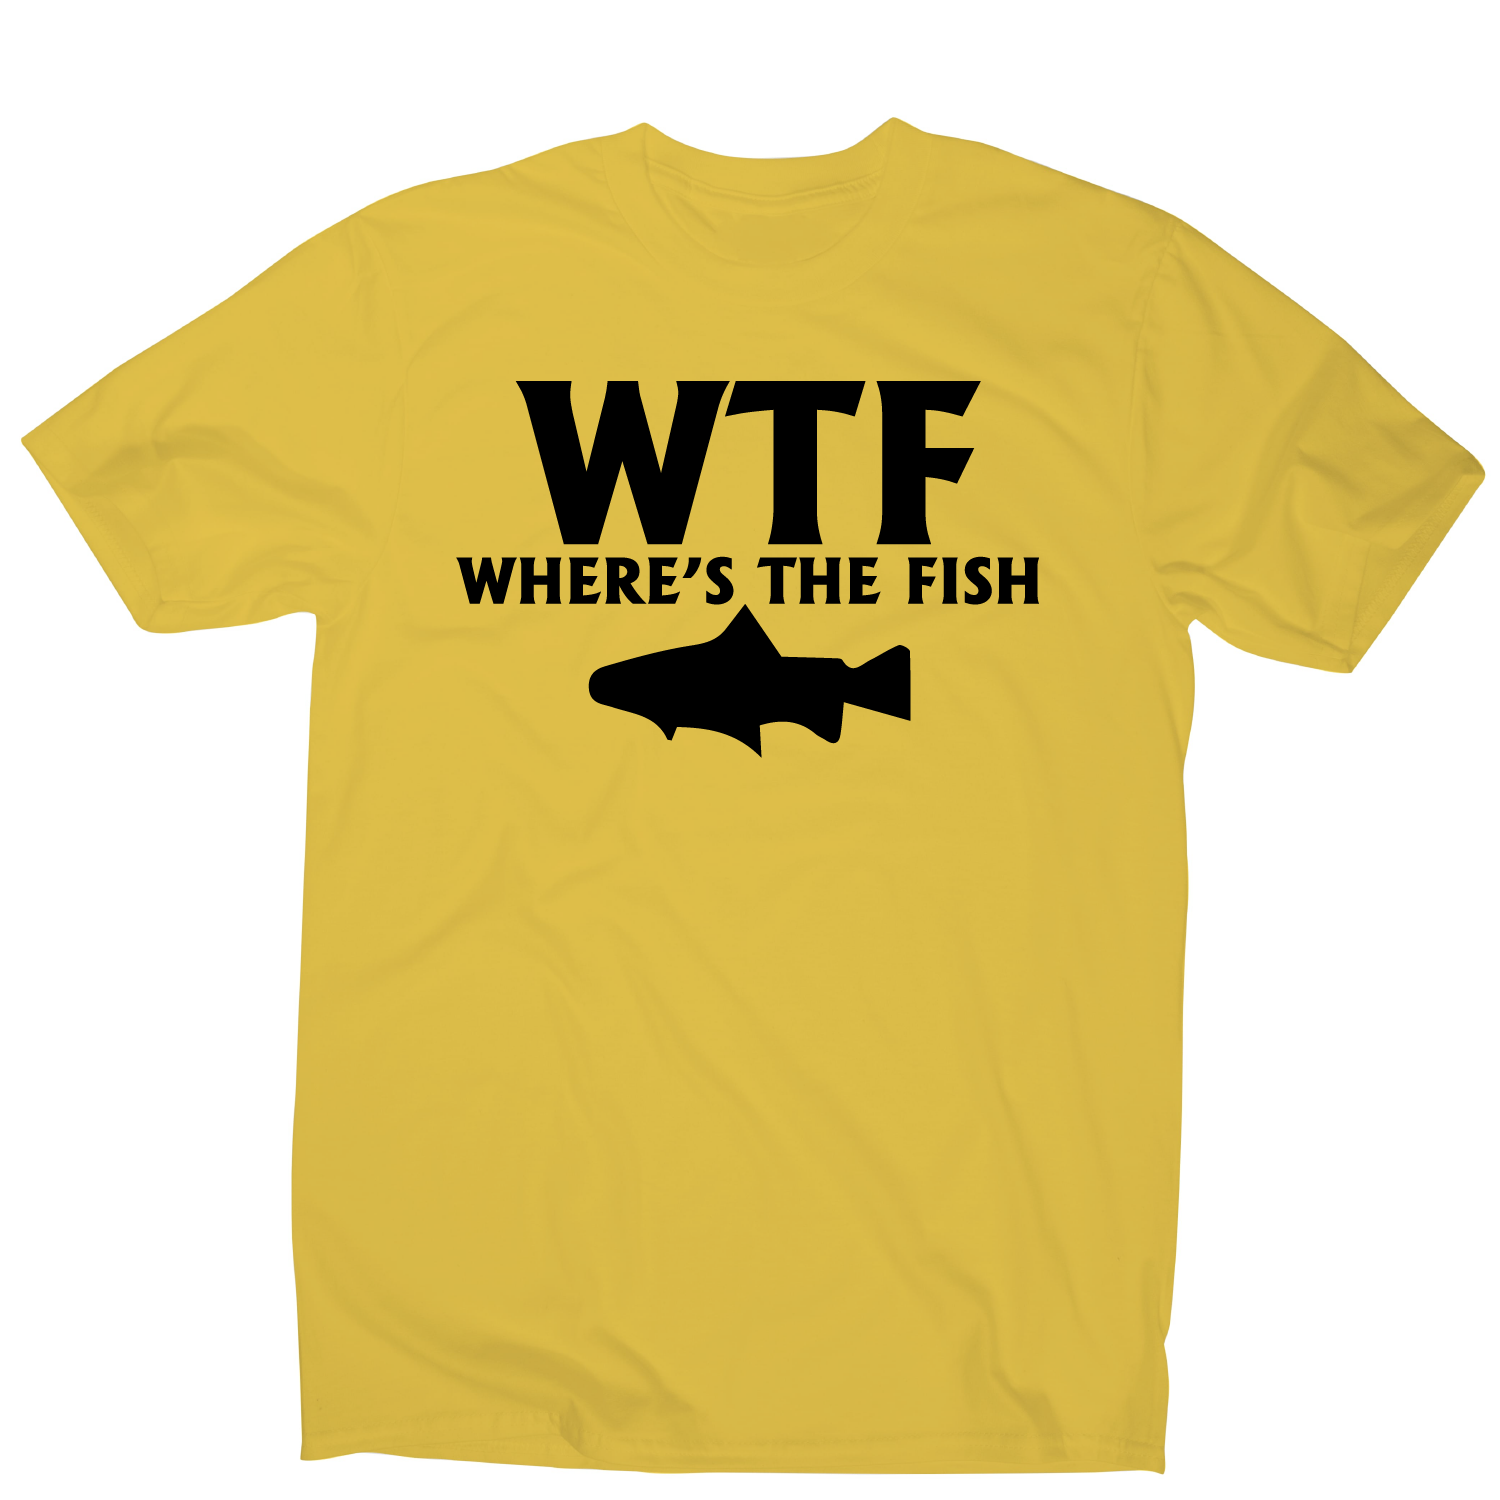 Wtf where's the fish funny fishing t-shirt men's